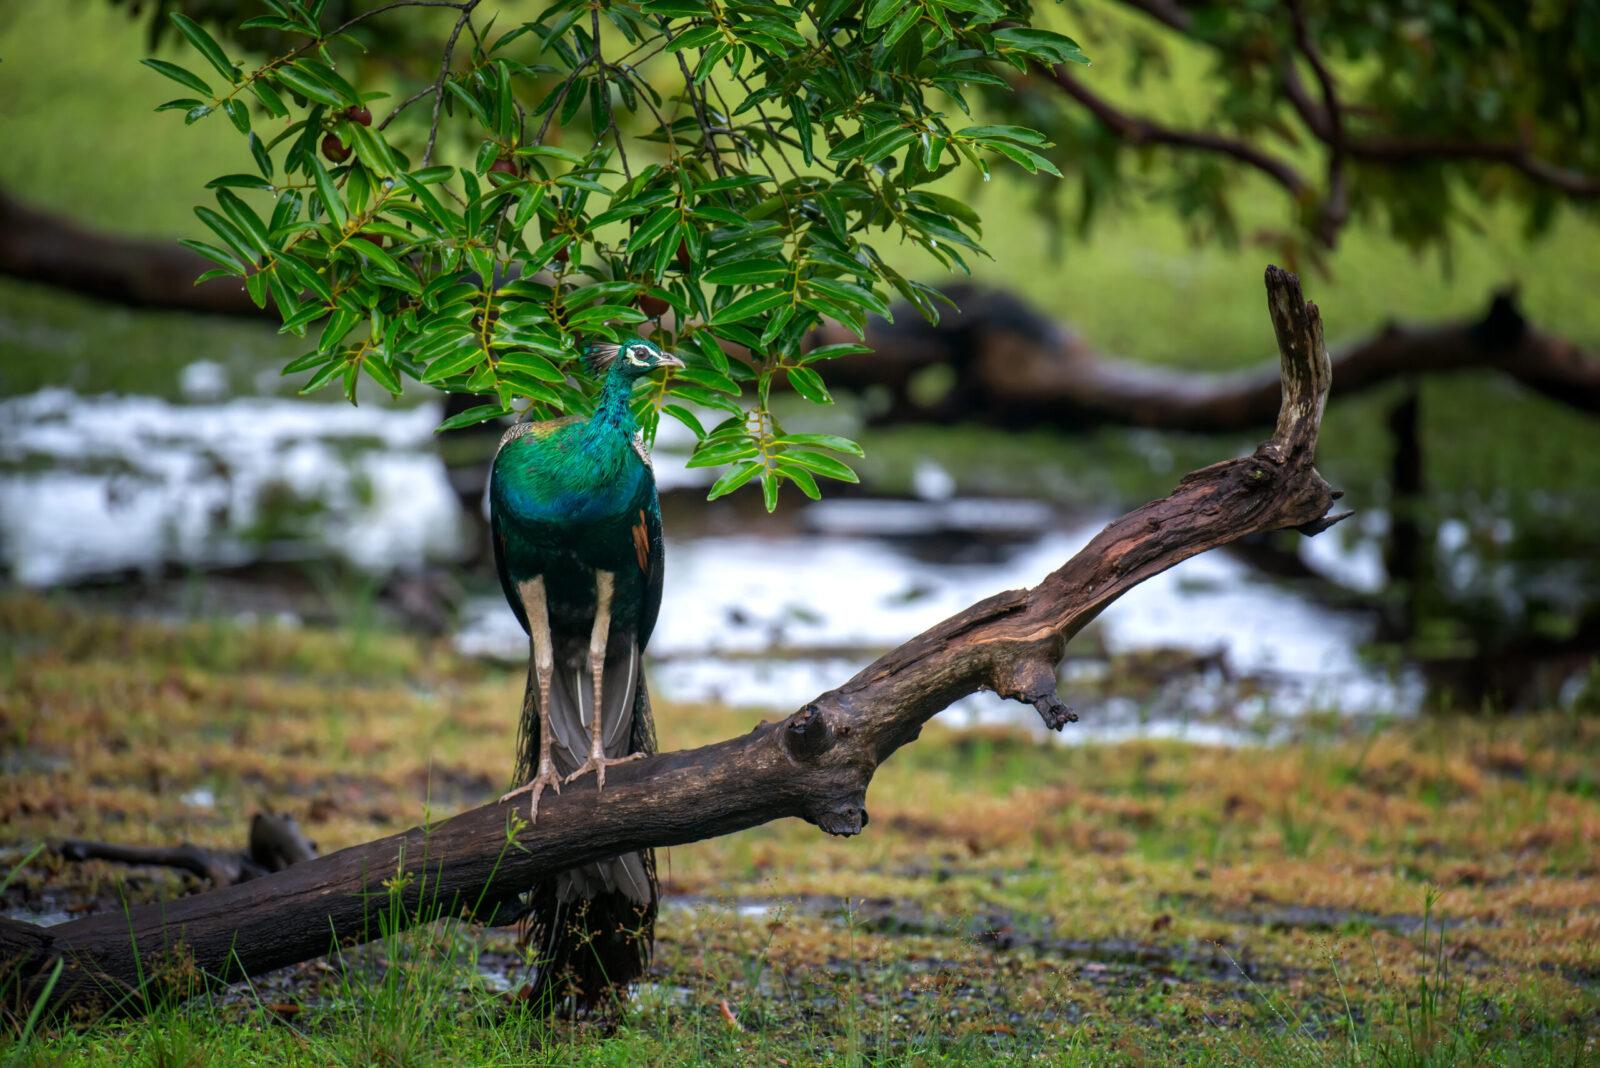 Peacock in Sri Lanka- Luxury safari holiday tours to Sri Lanka